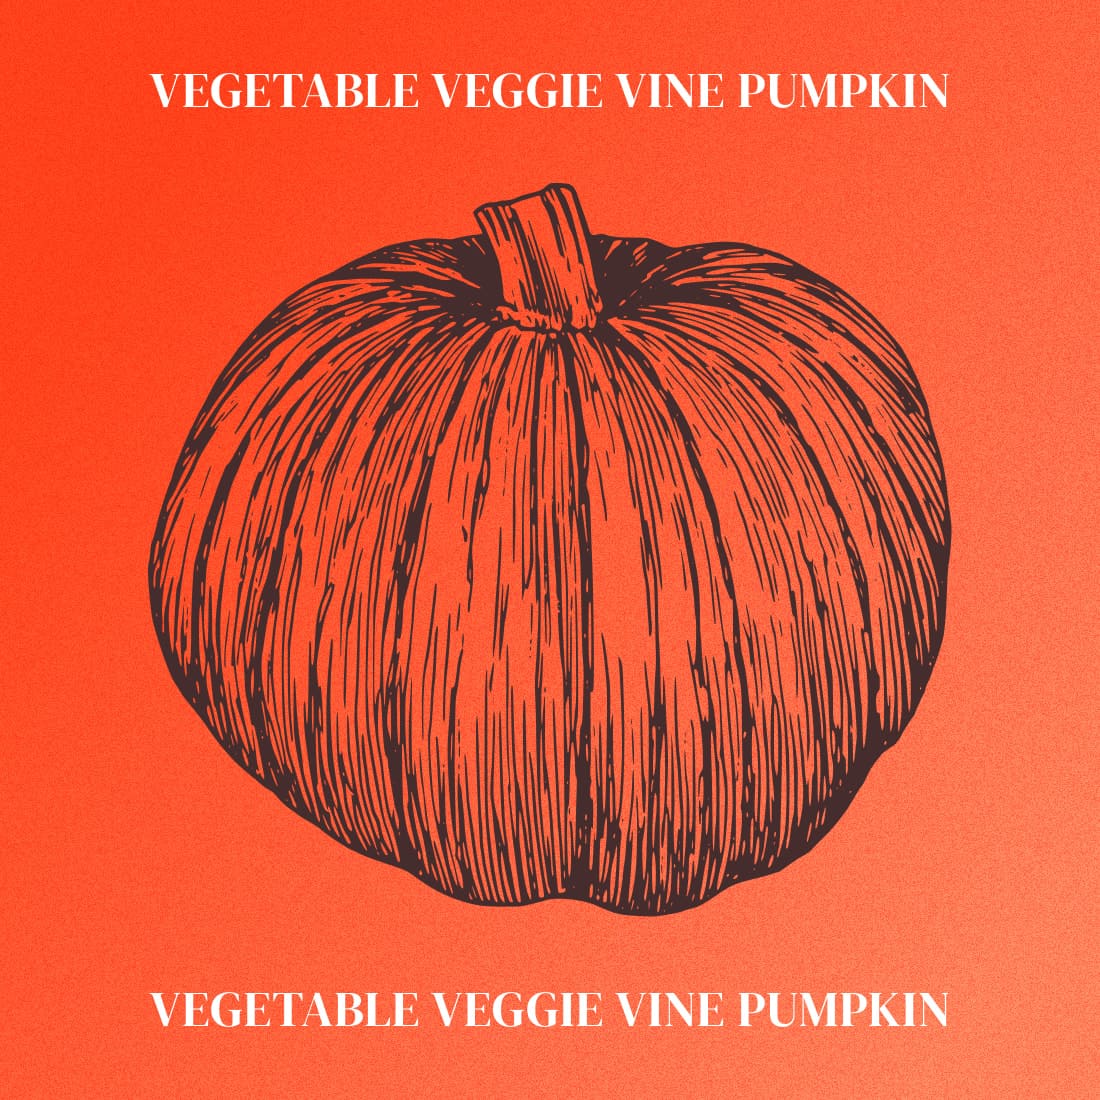 Vegetable Veggie Vine Pumpkin - Orange Colorful Image.